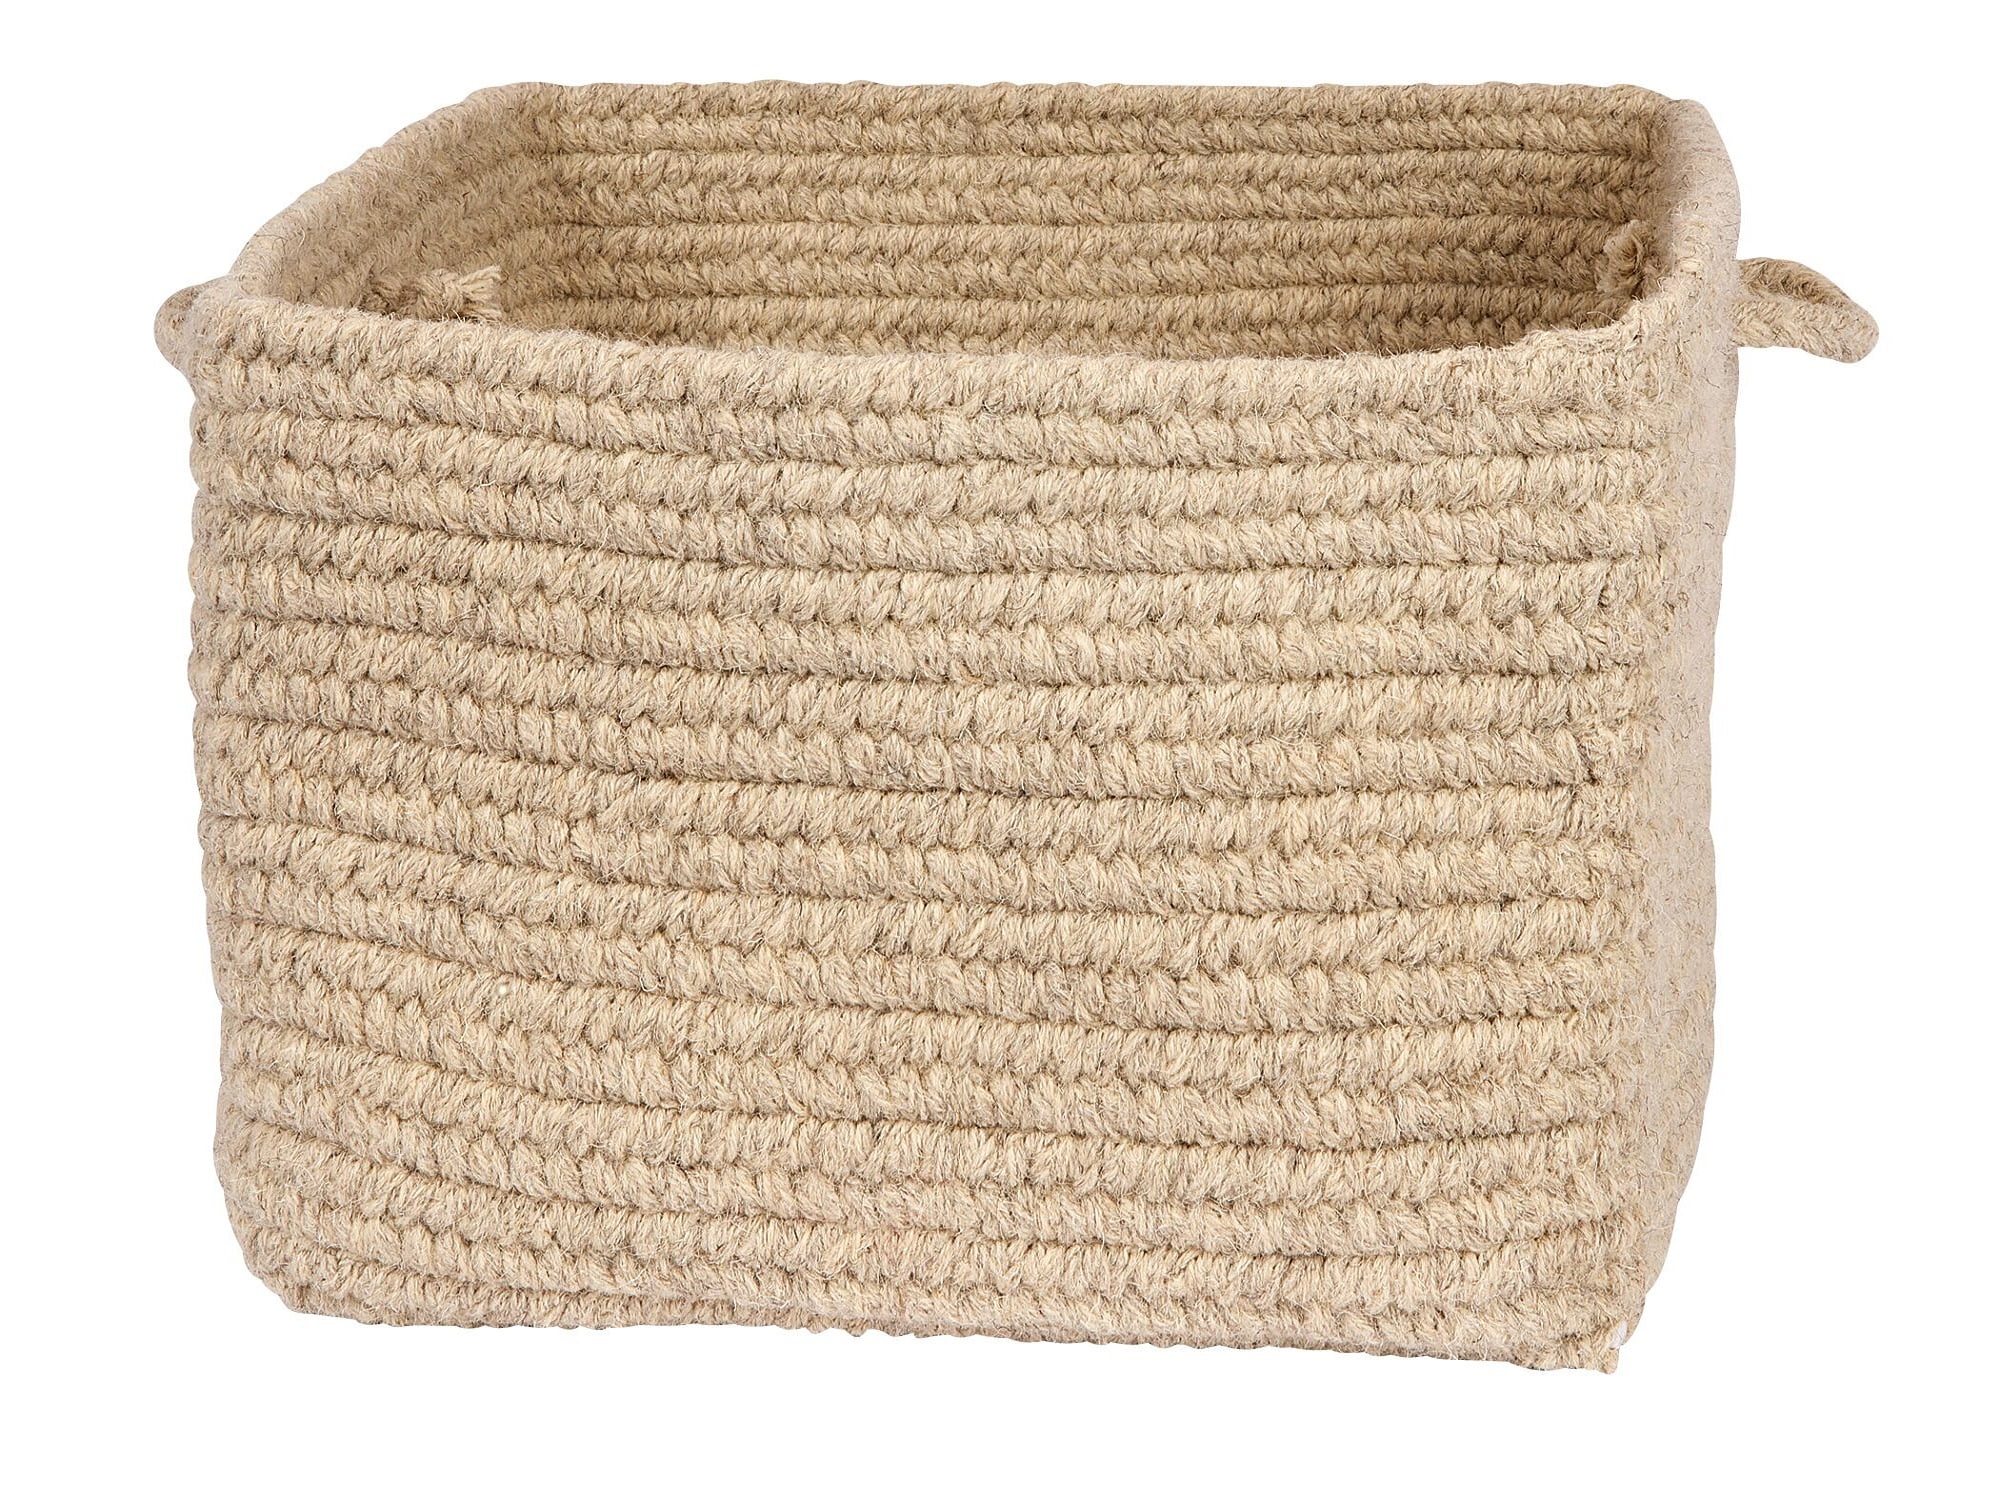 18 X 18 X 12 In. Chunky Natural Wool Light Beige Storage Basket